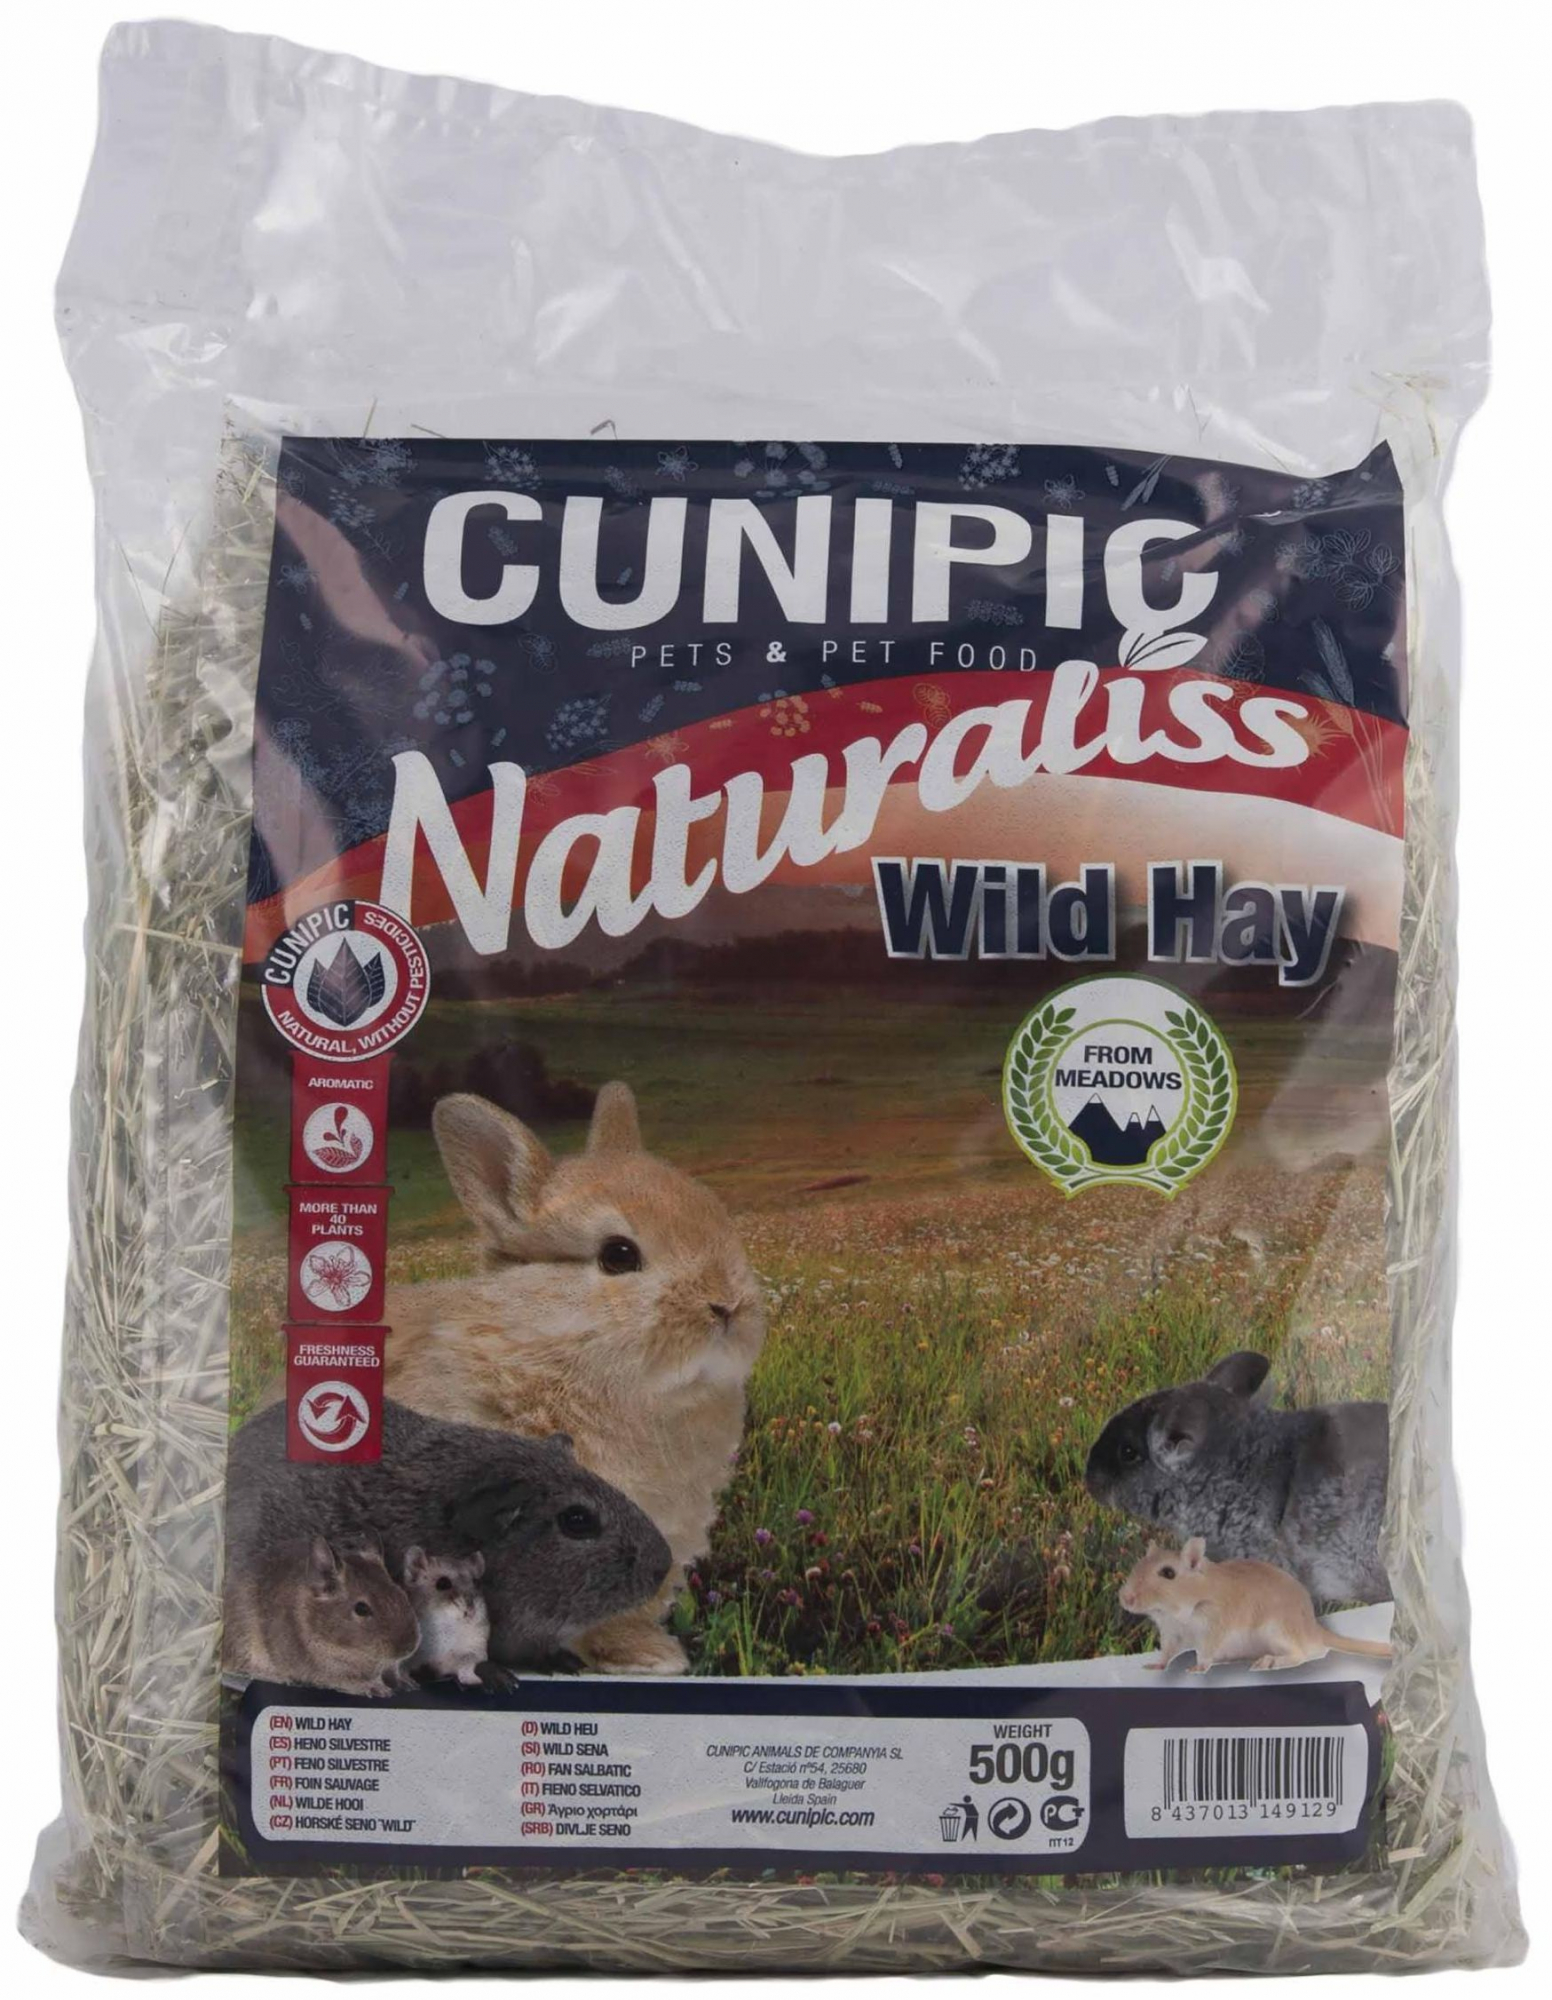 Cunipic Naturaliss Wild Hay - Feno selvagem para coelhos e roedores